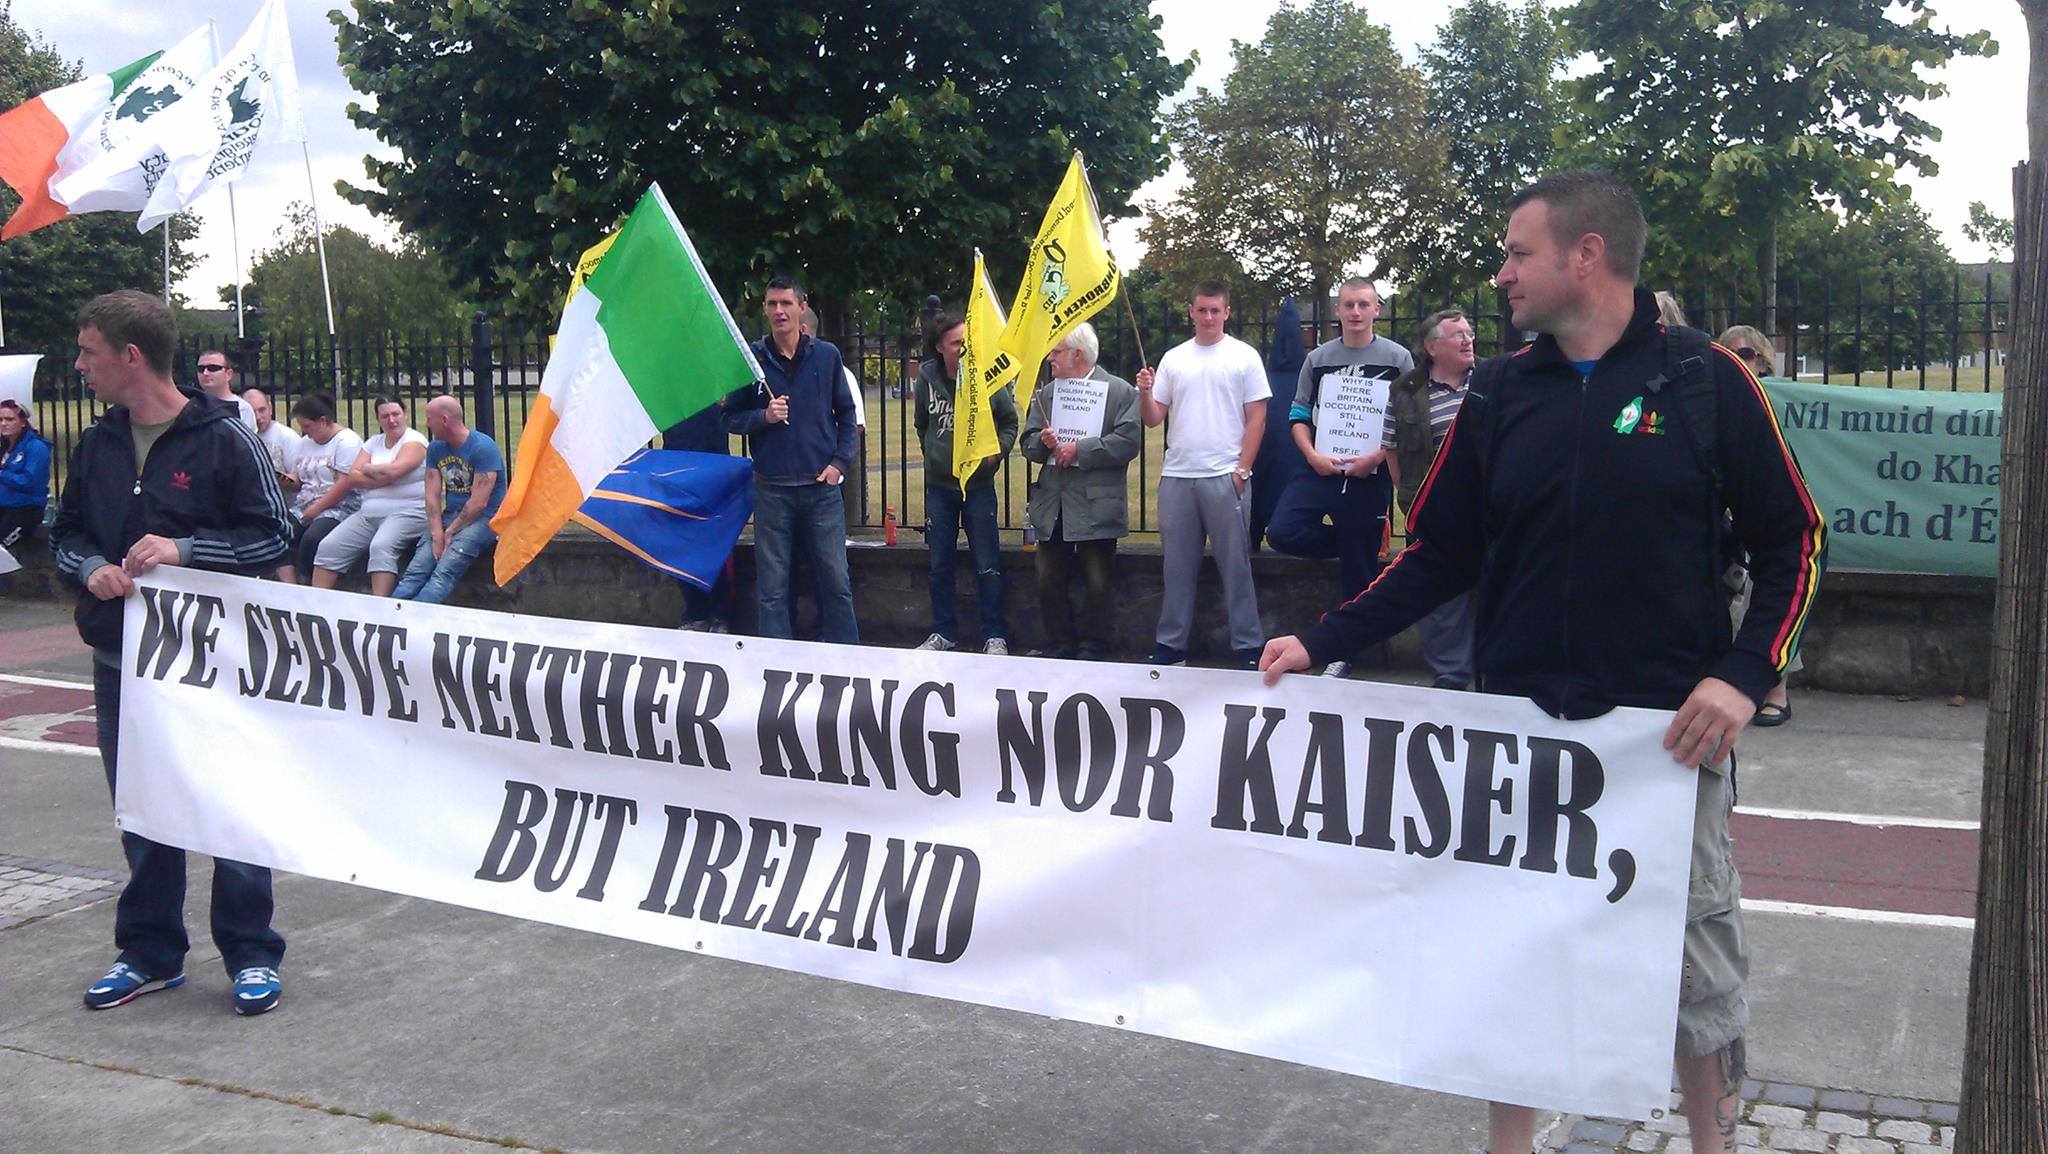 RSF: Manifestazione anti-reali a Dublino